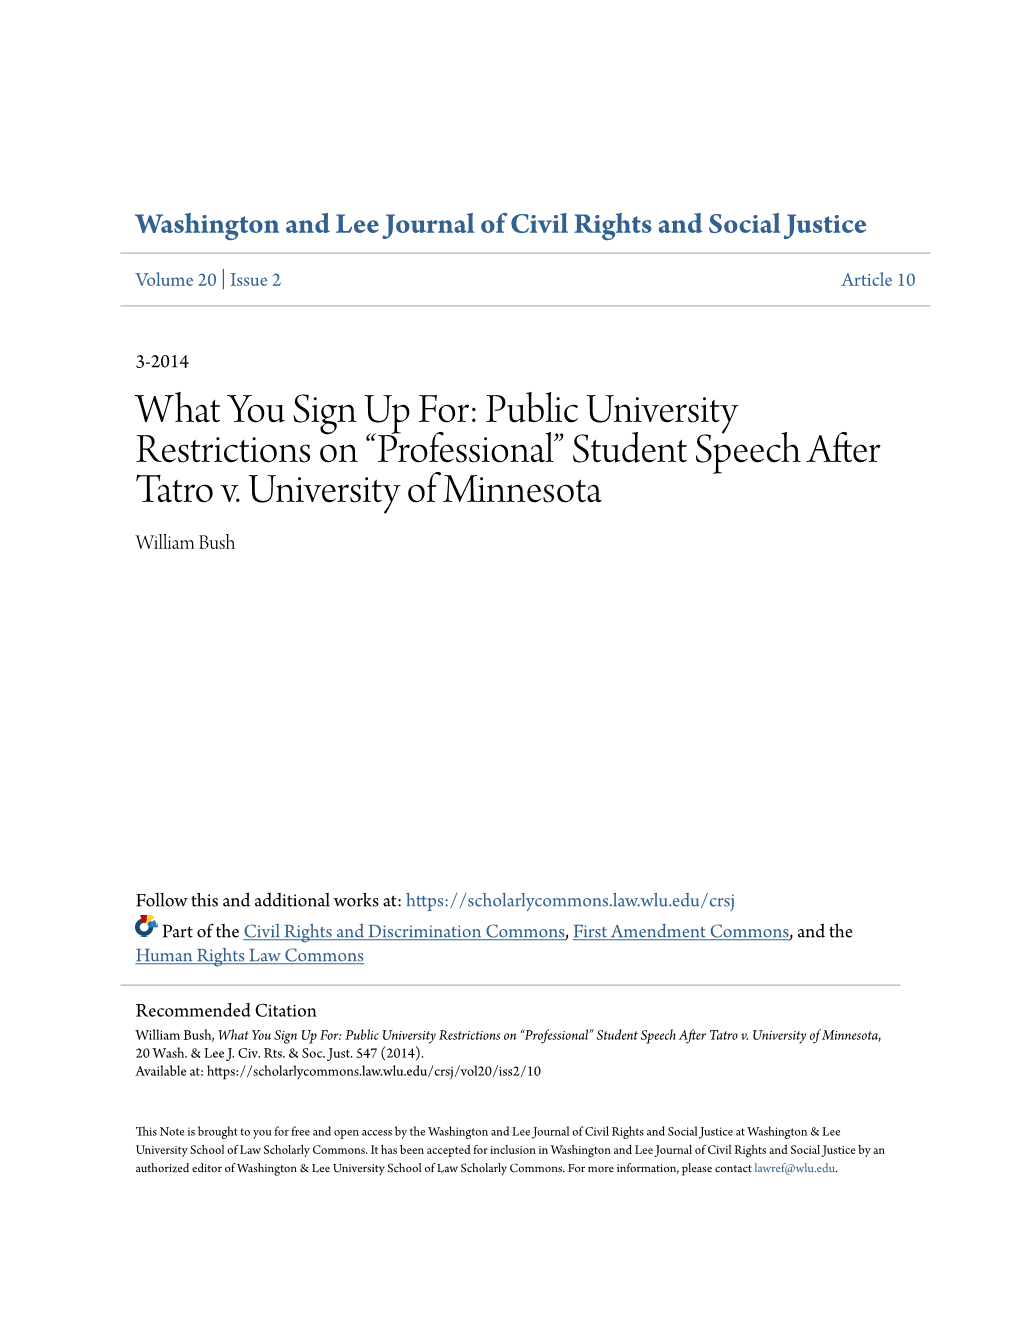 Student Speech After Tatro V. University of Minnesota William Bush